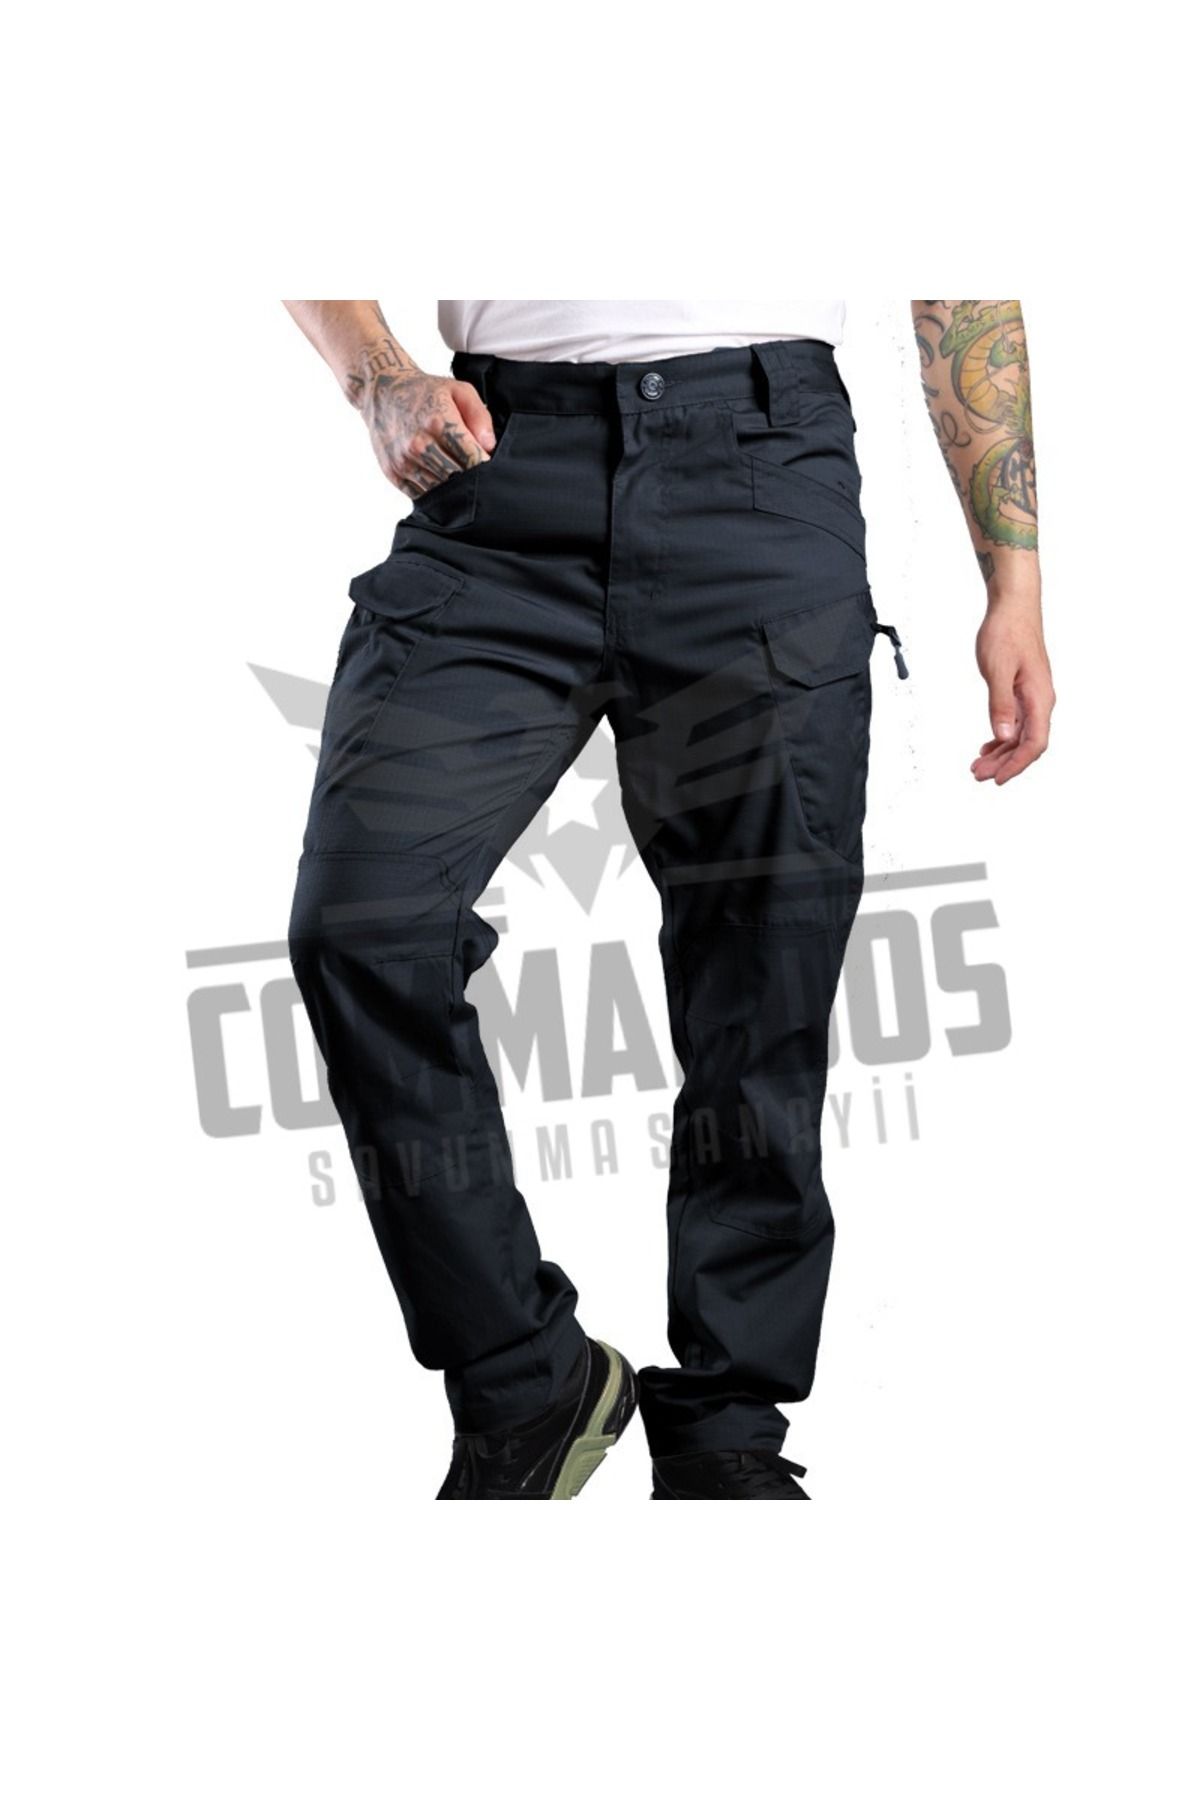 5.11 Tactical Men's Black Outdoor Tactical Trousers